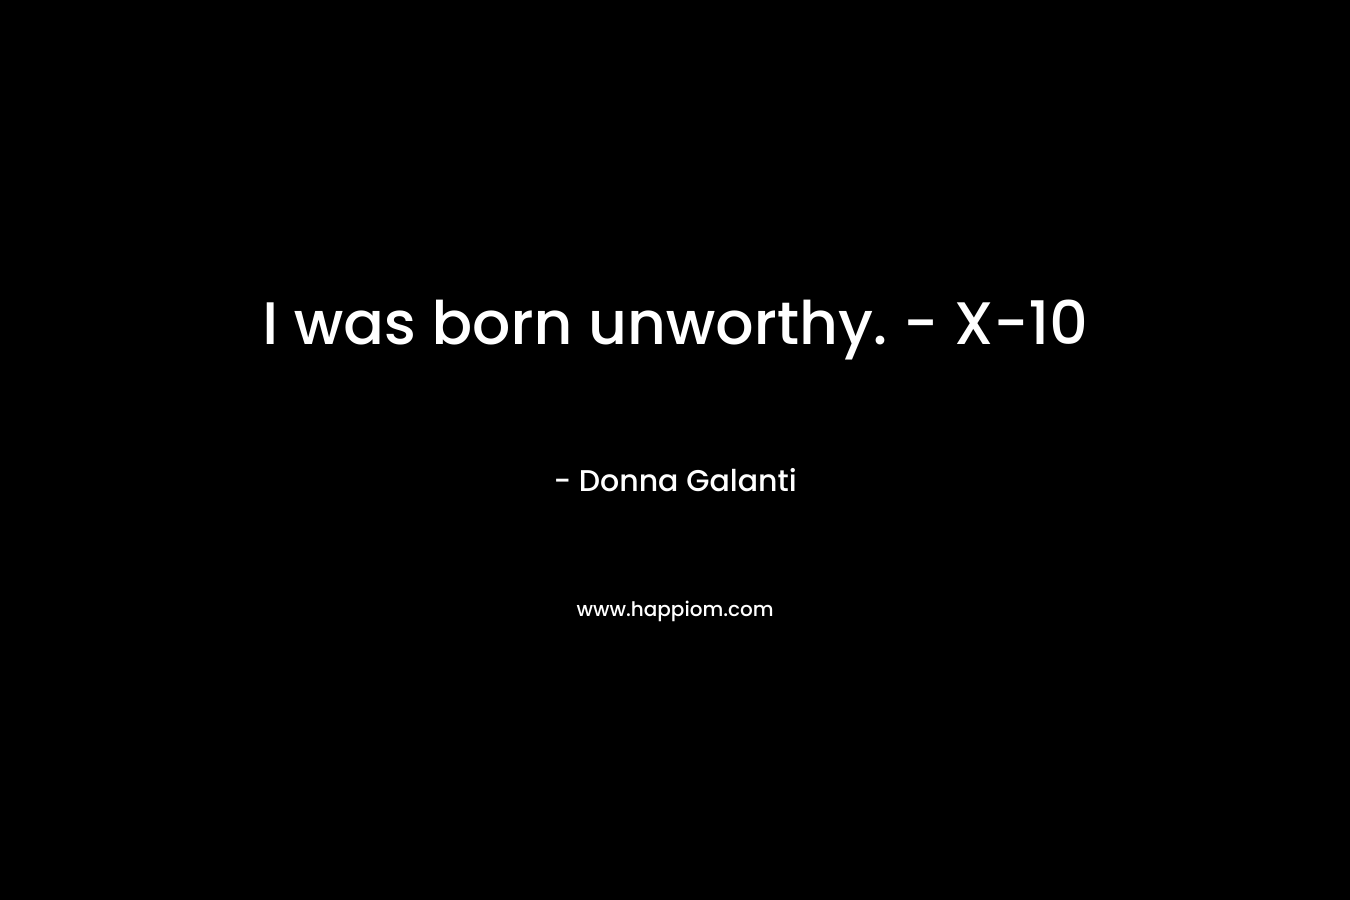 I was born unworthy. - X-10